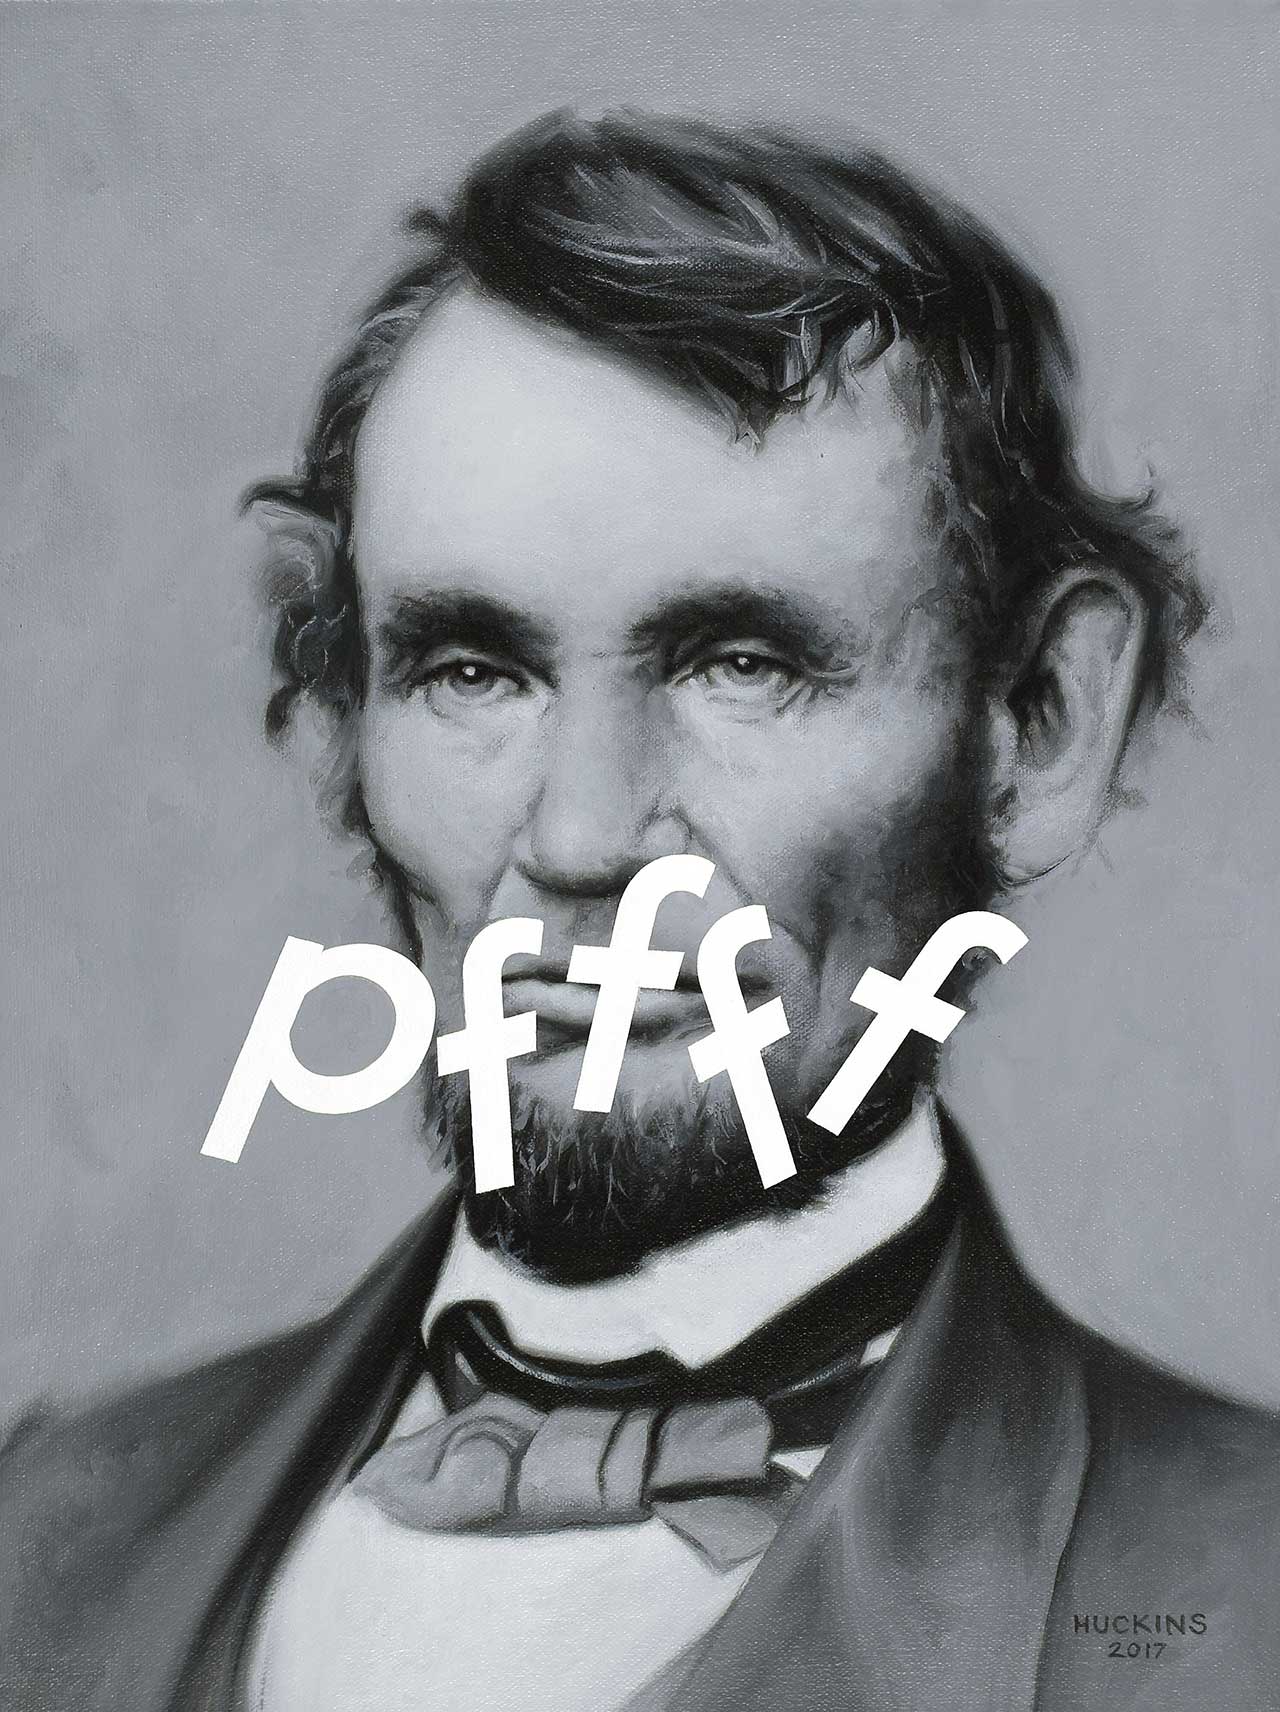 Abraham Lincoln: Pffff, 2017. Acrylic